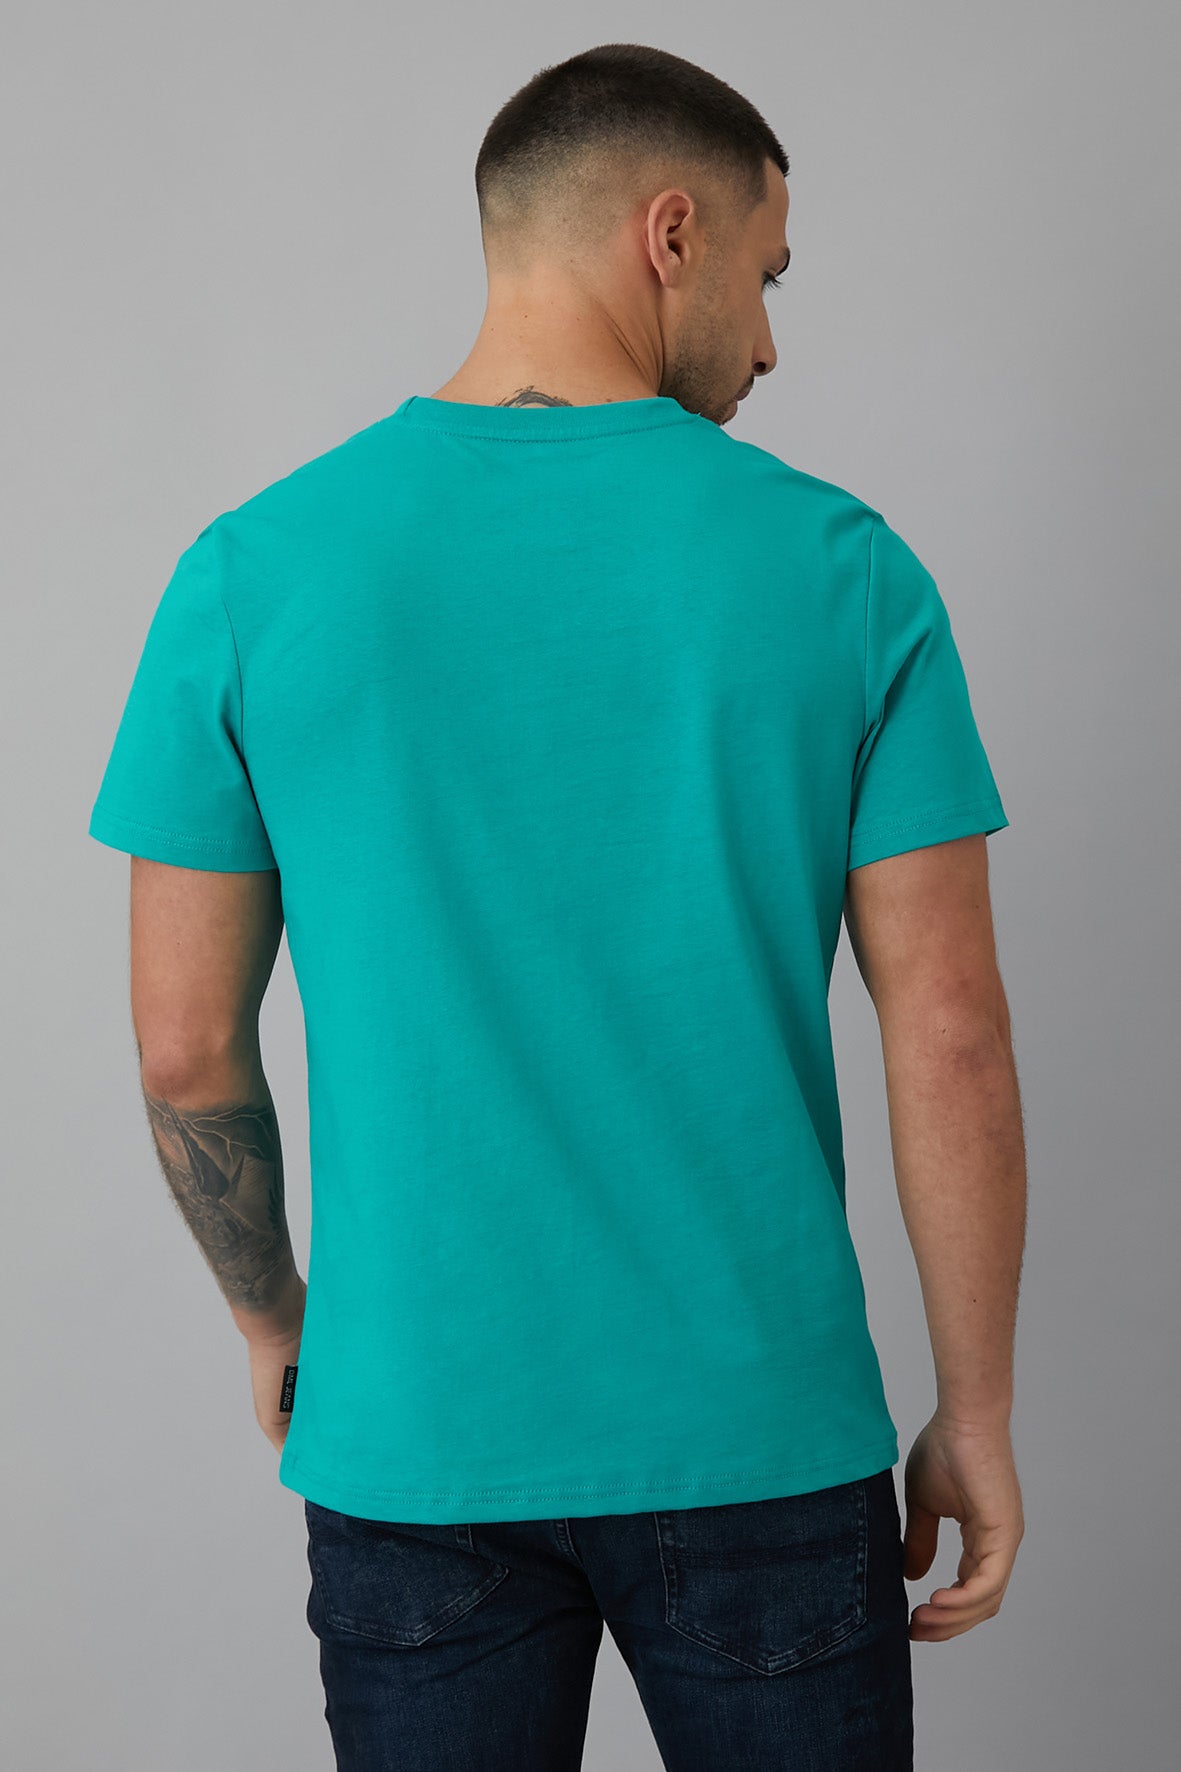 SCORE Printed crew neck t-shirt in JADE - DML Jeans 